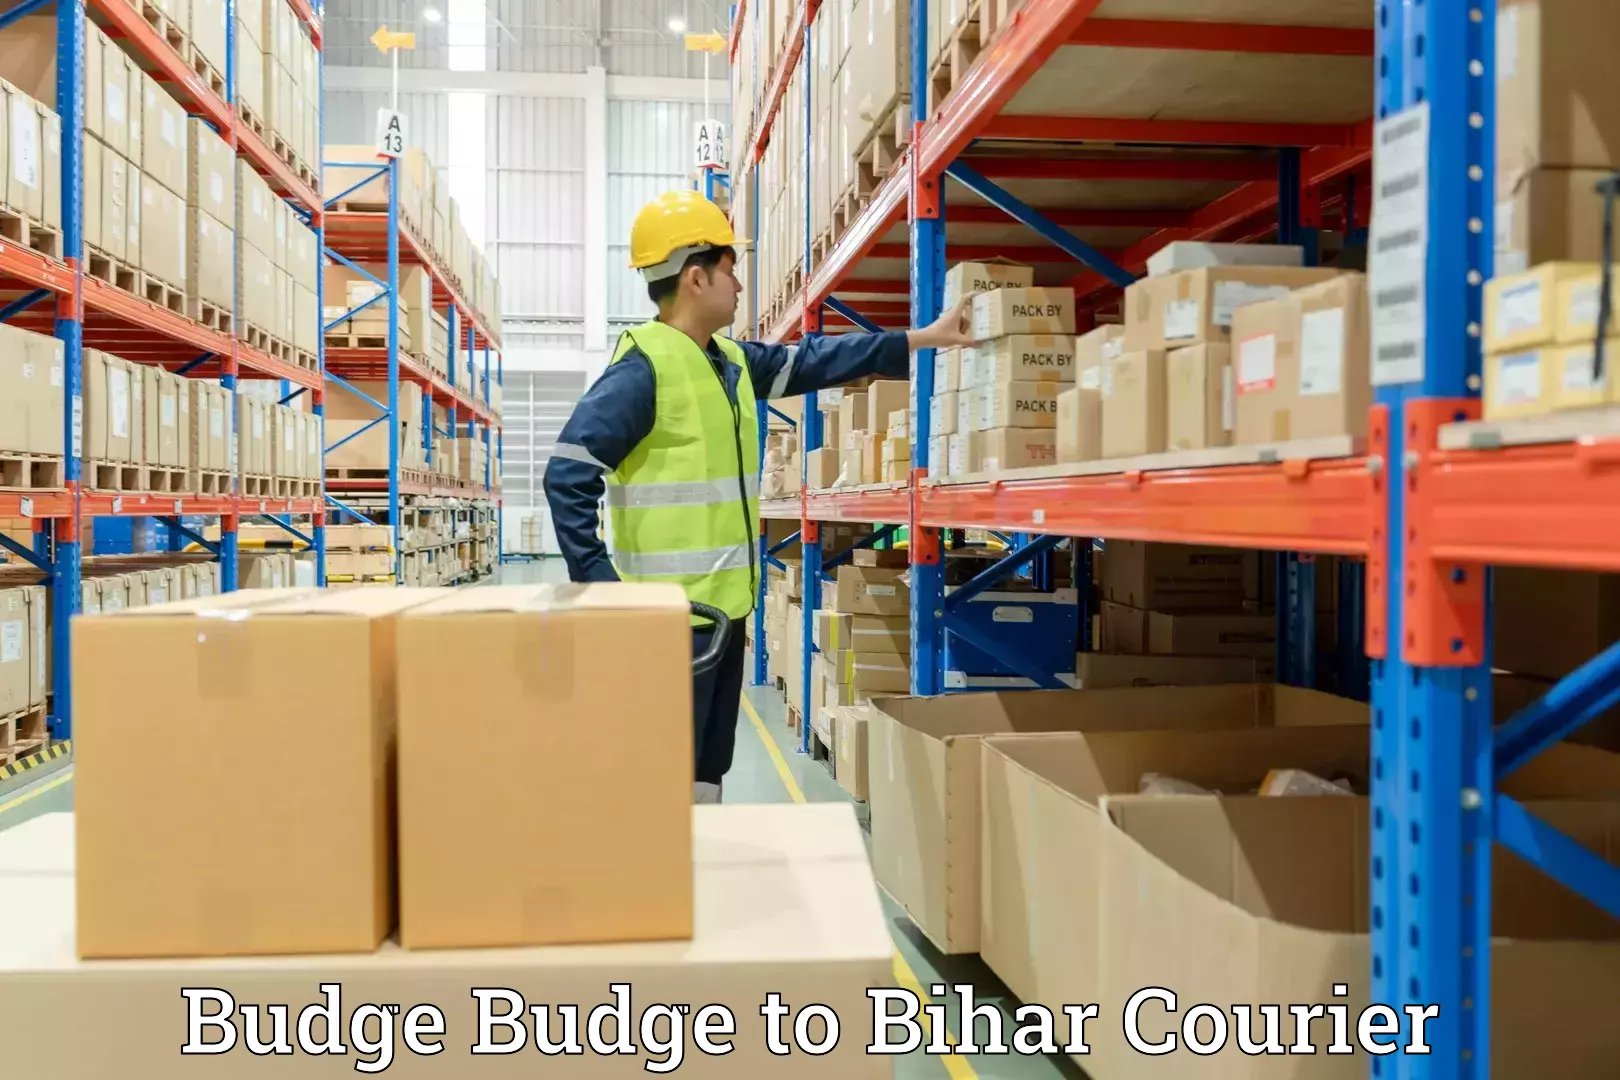 Stress-free moving Budge Budge to Bihar